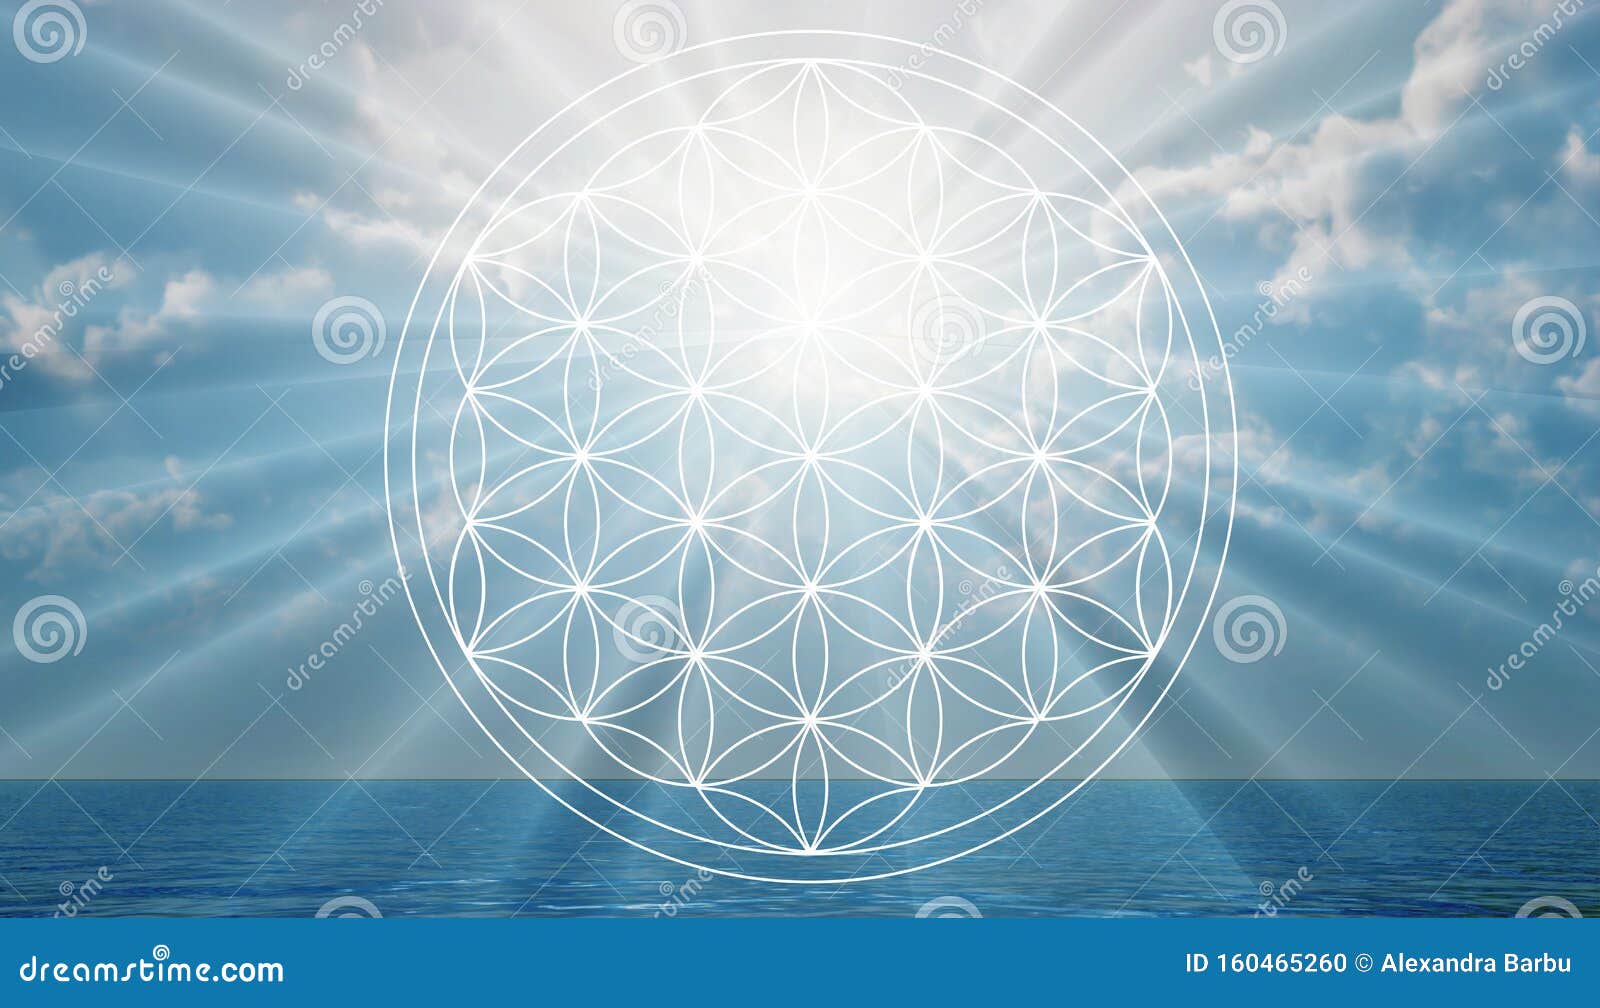 Flower Of Life Symbol In The Sky Portal Life Stock Photo Image Of Light Harmonic 160465260